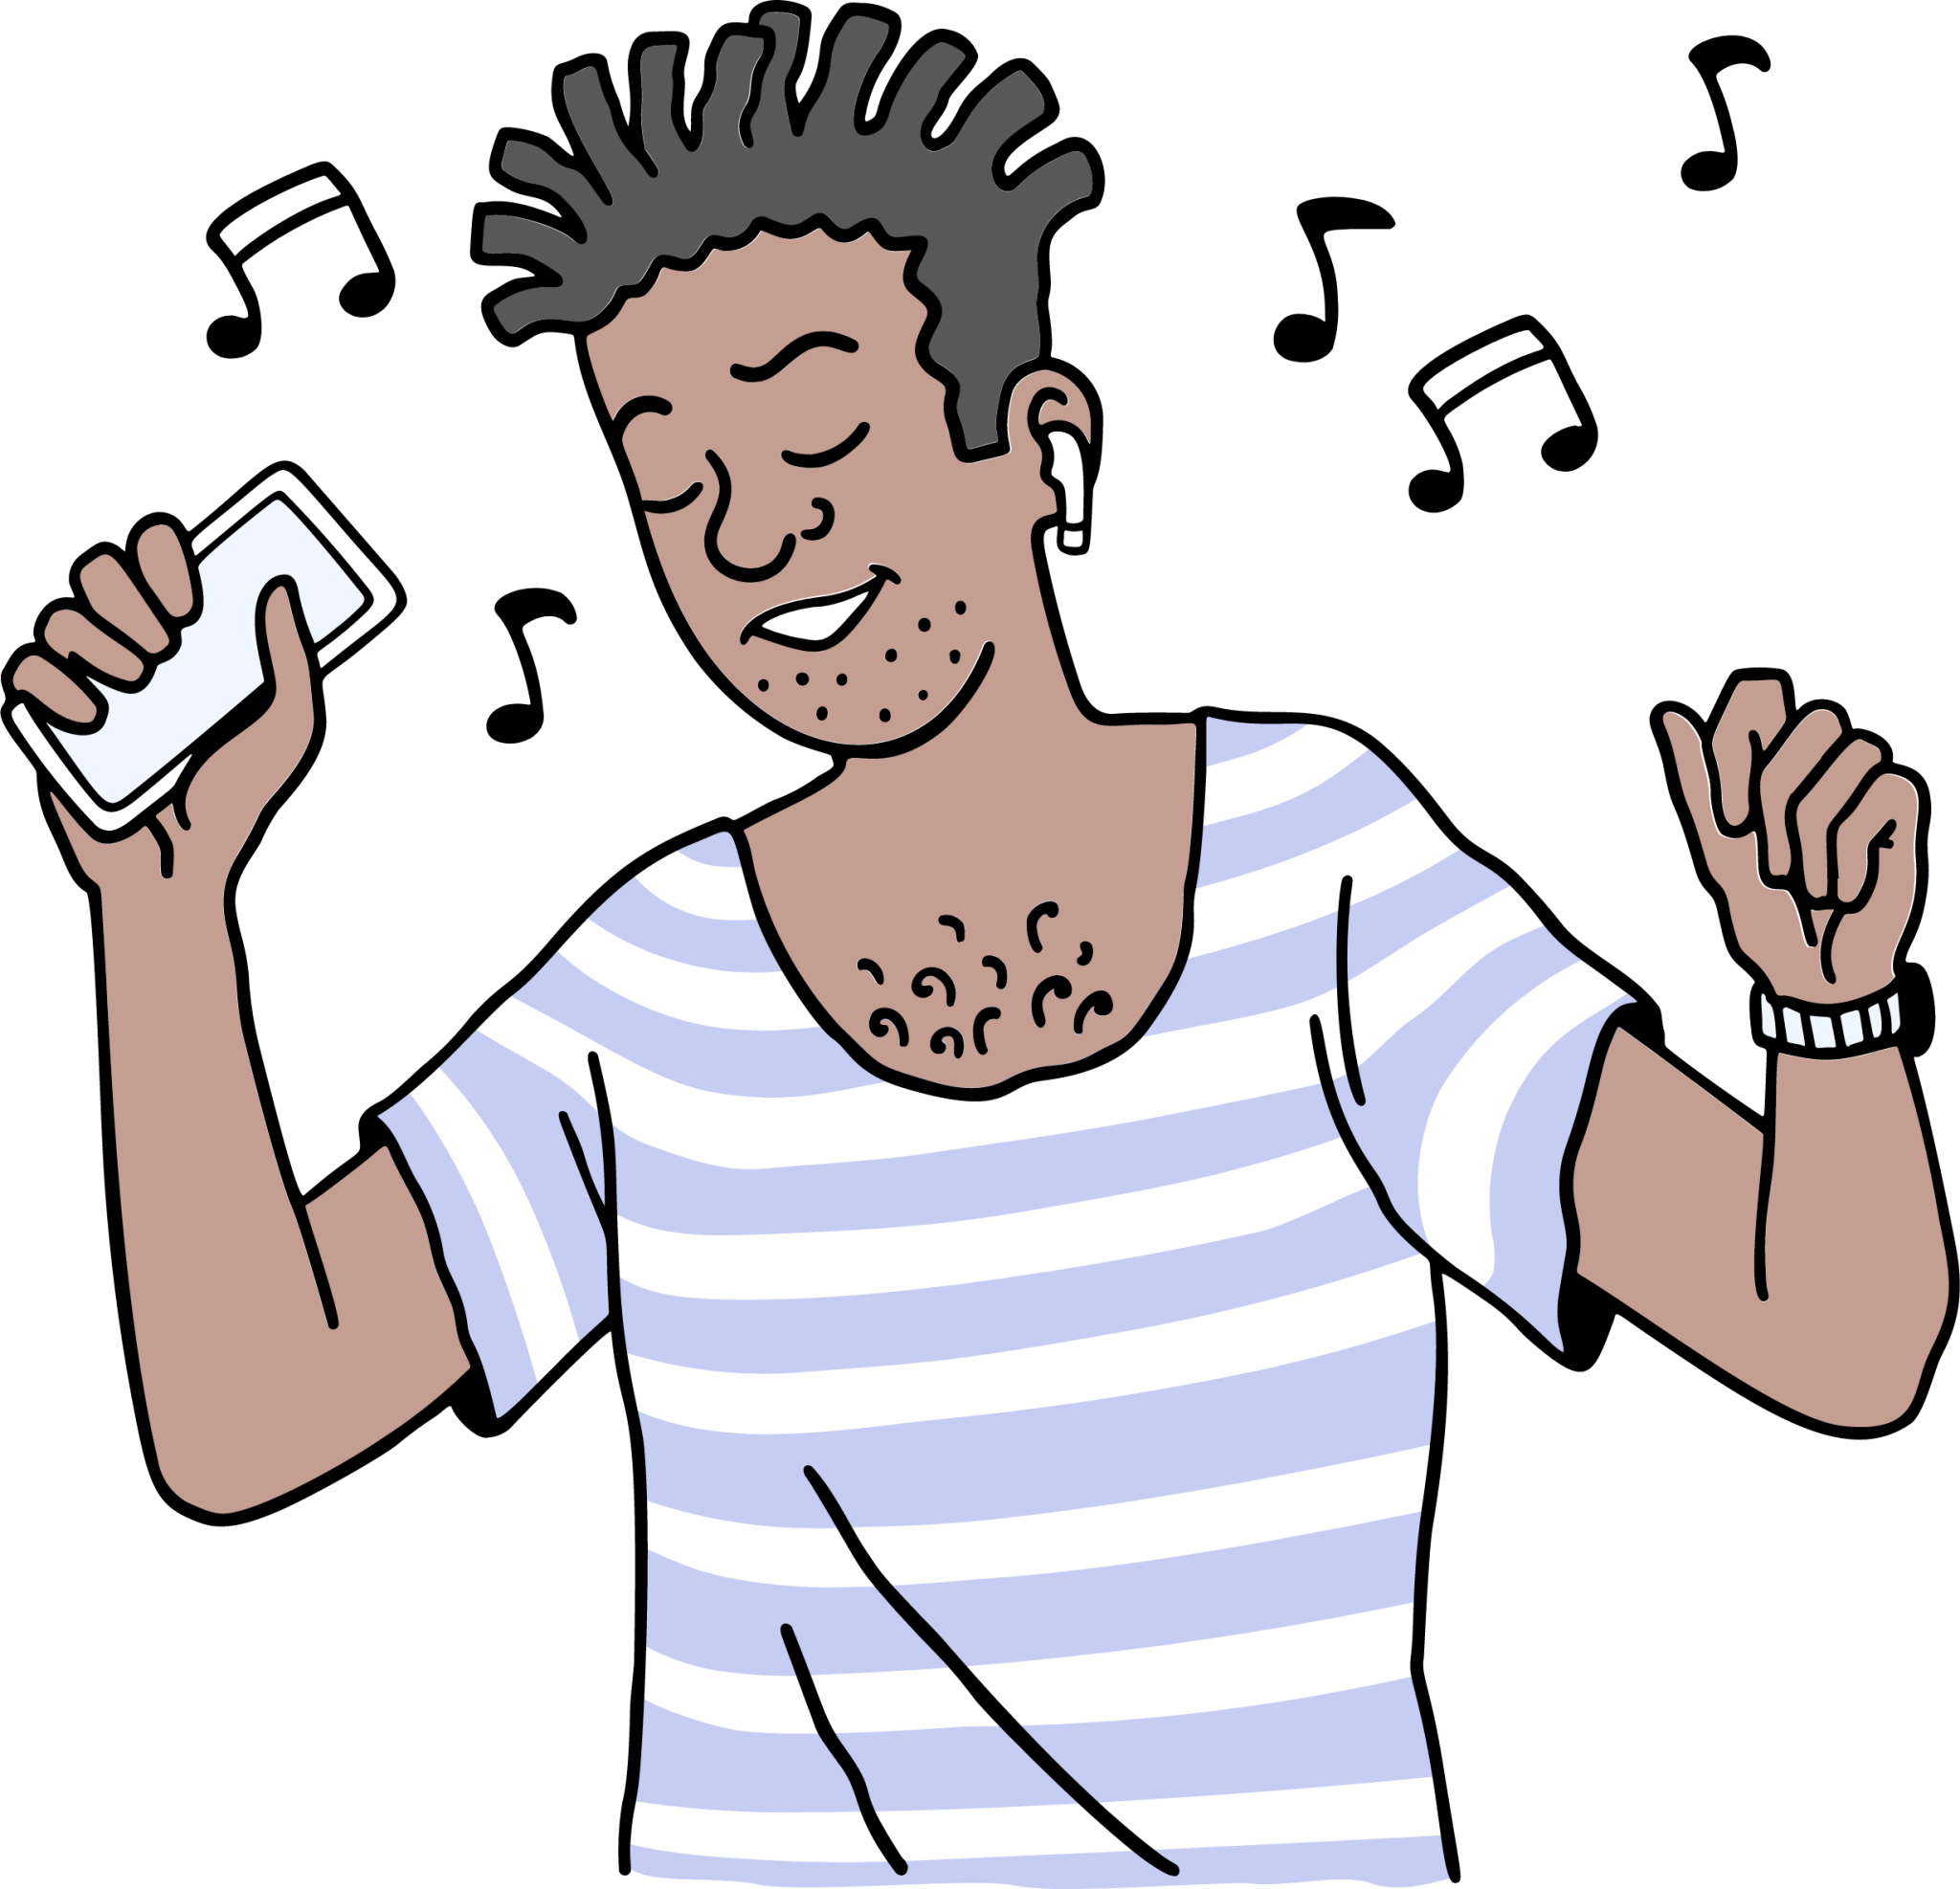 man dancing phone music illustration